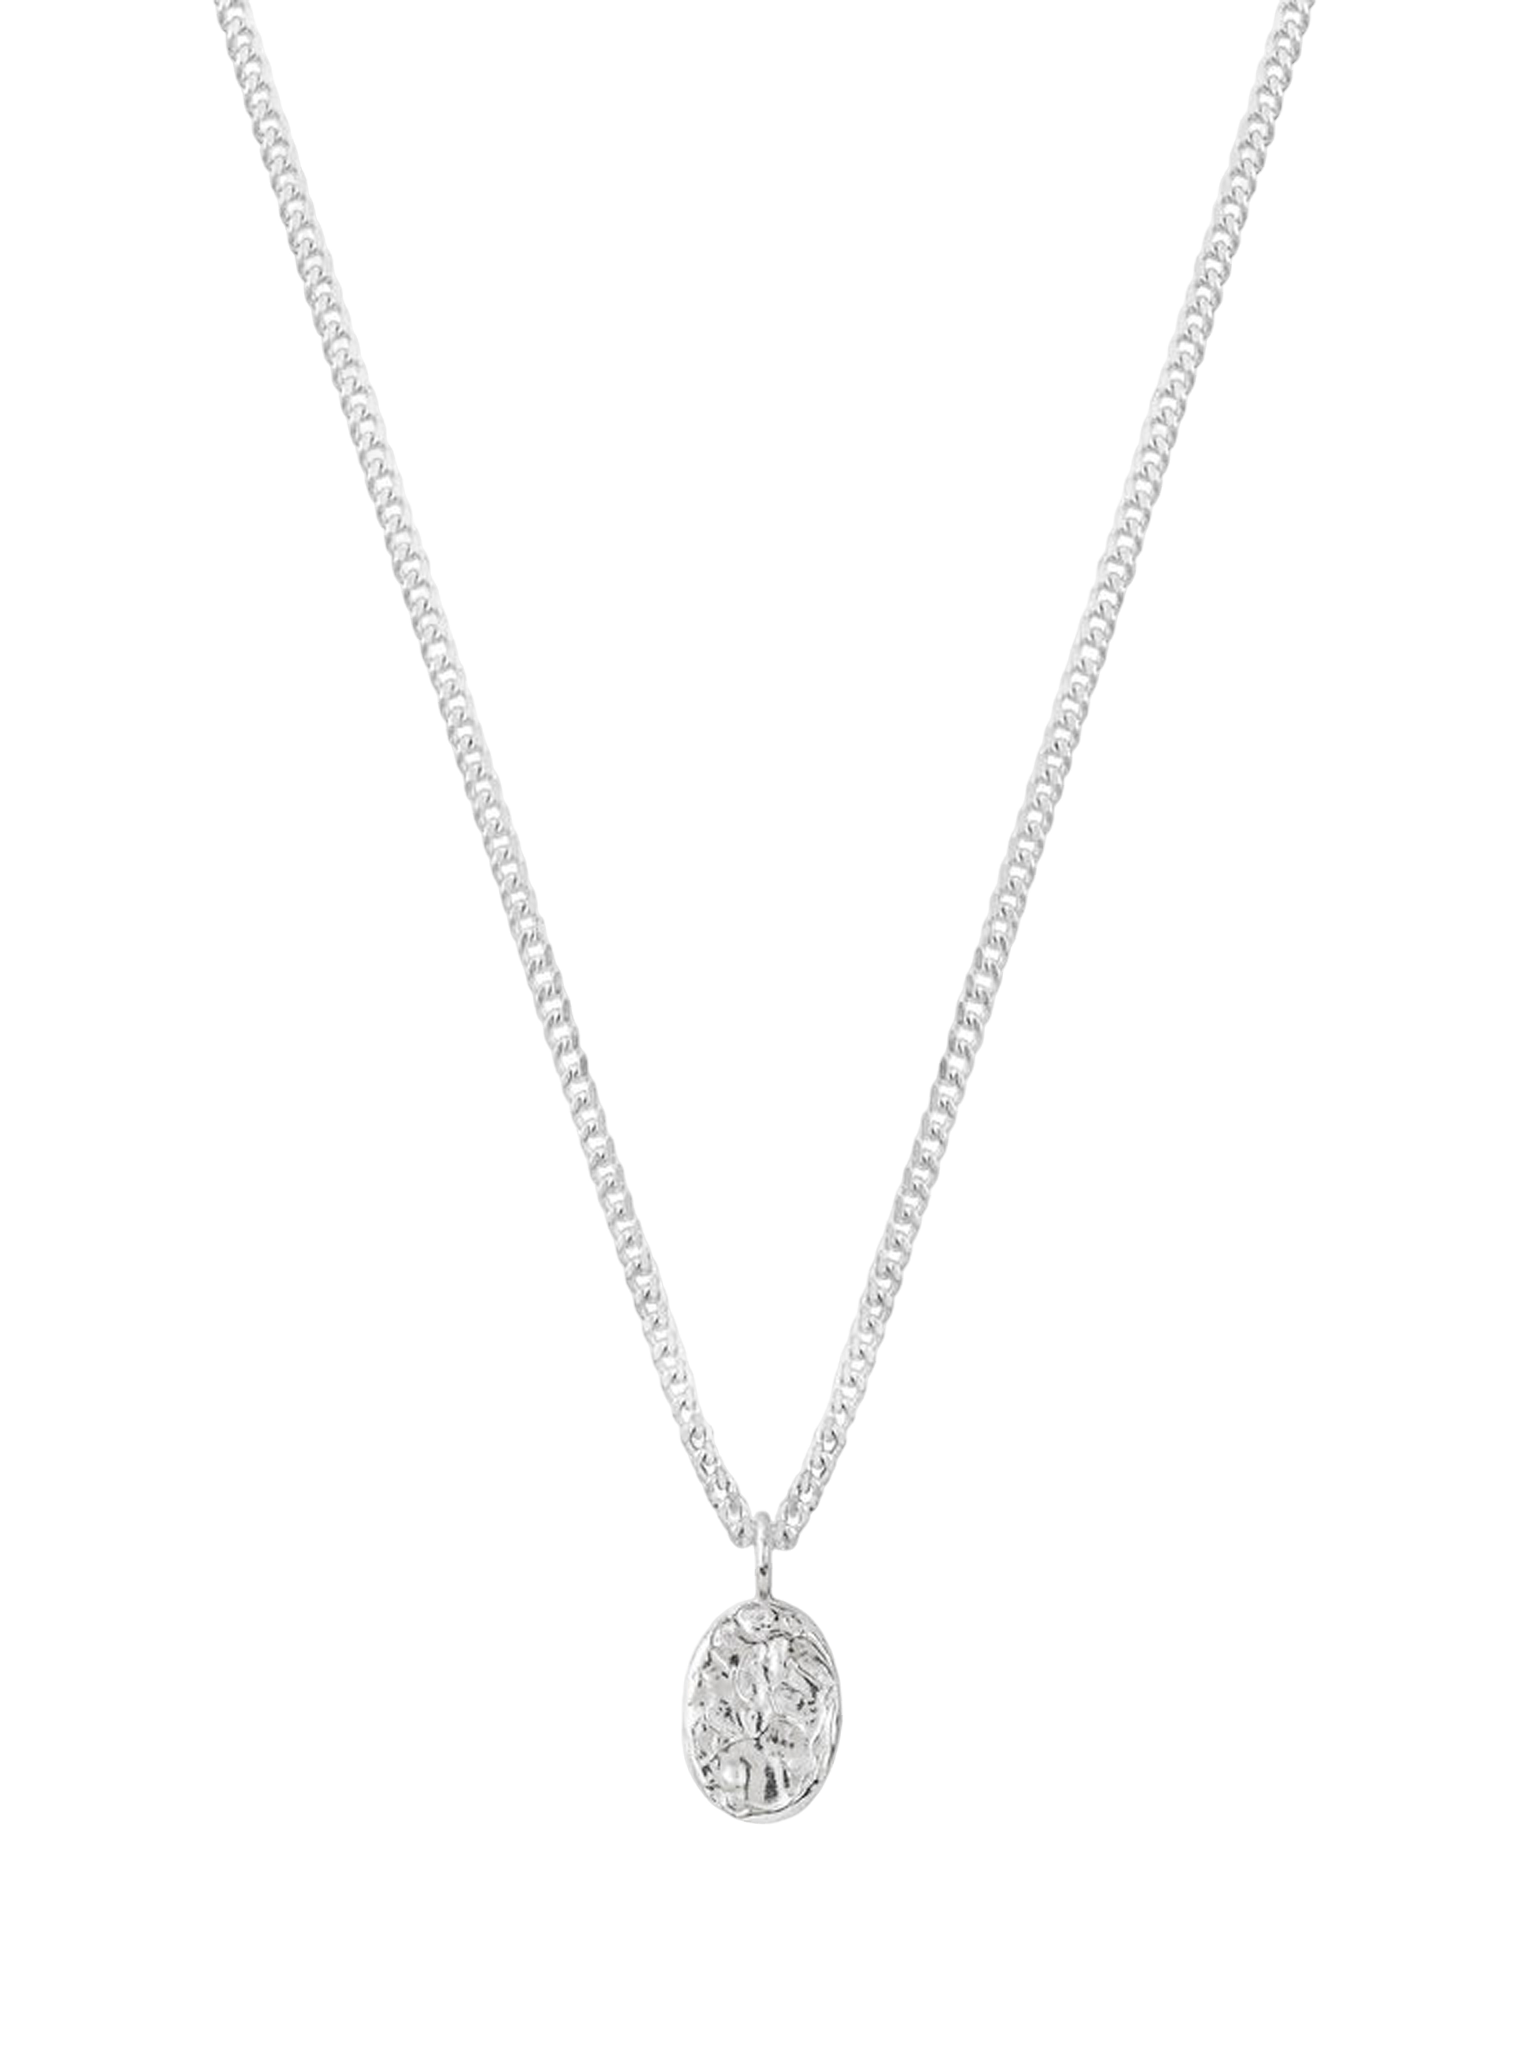 Organic oval pendant necklace